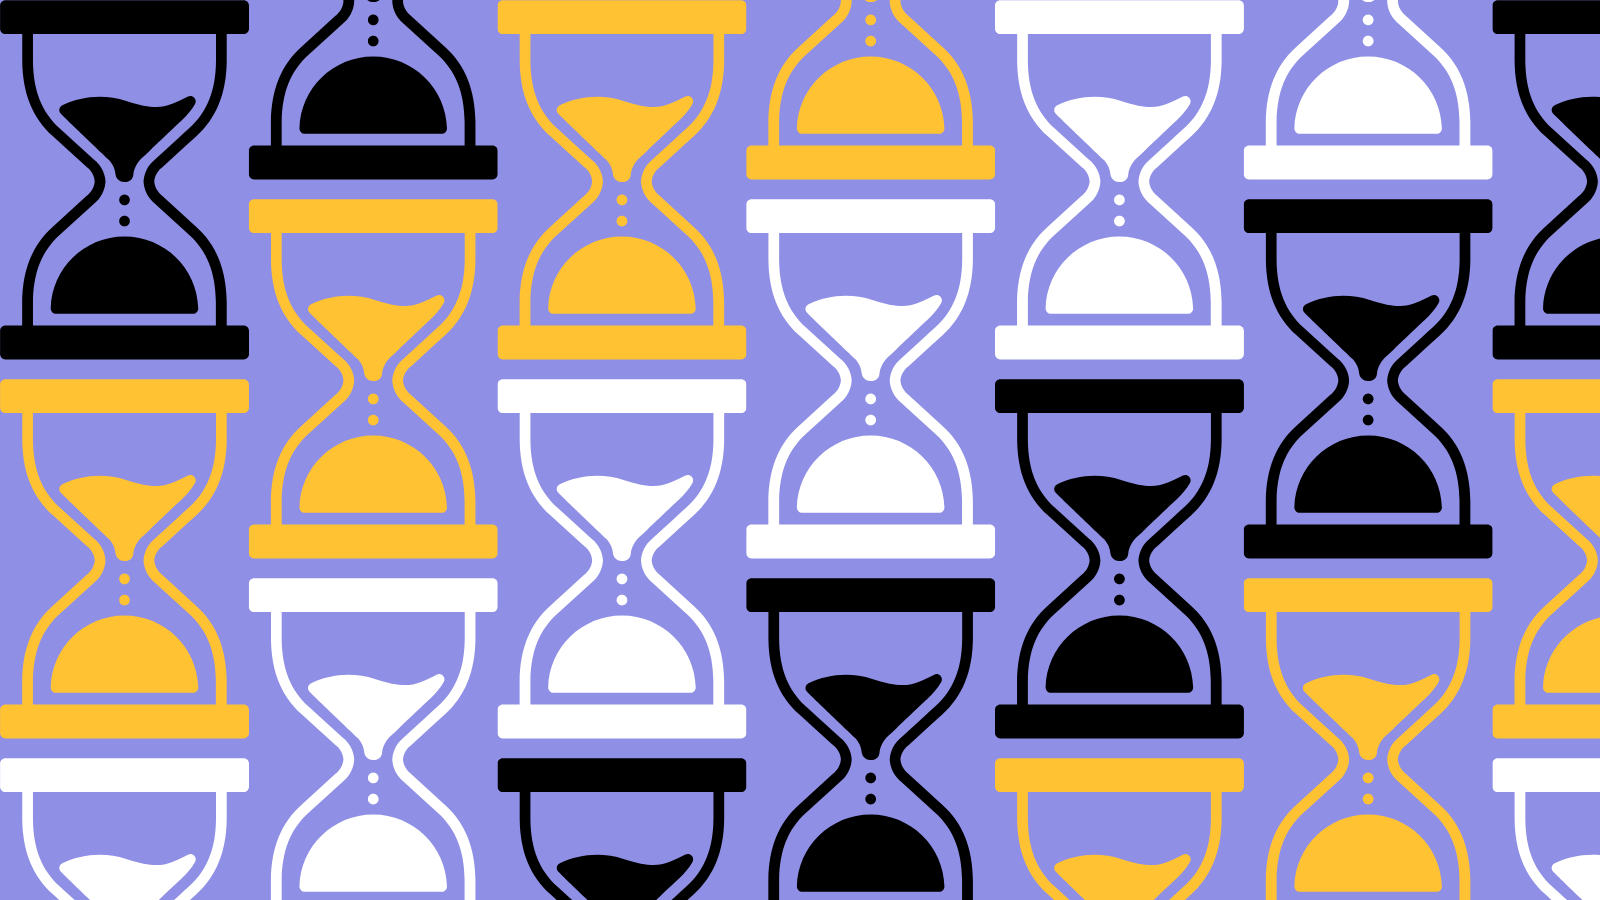 Hourglass graphics arranged in diagonal lines